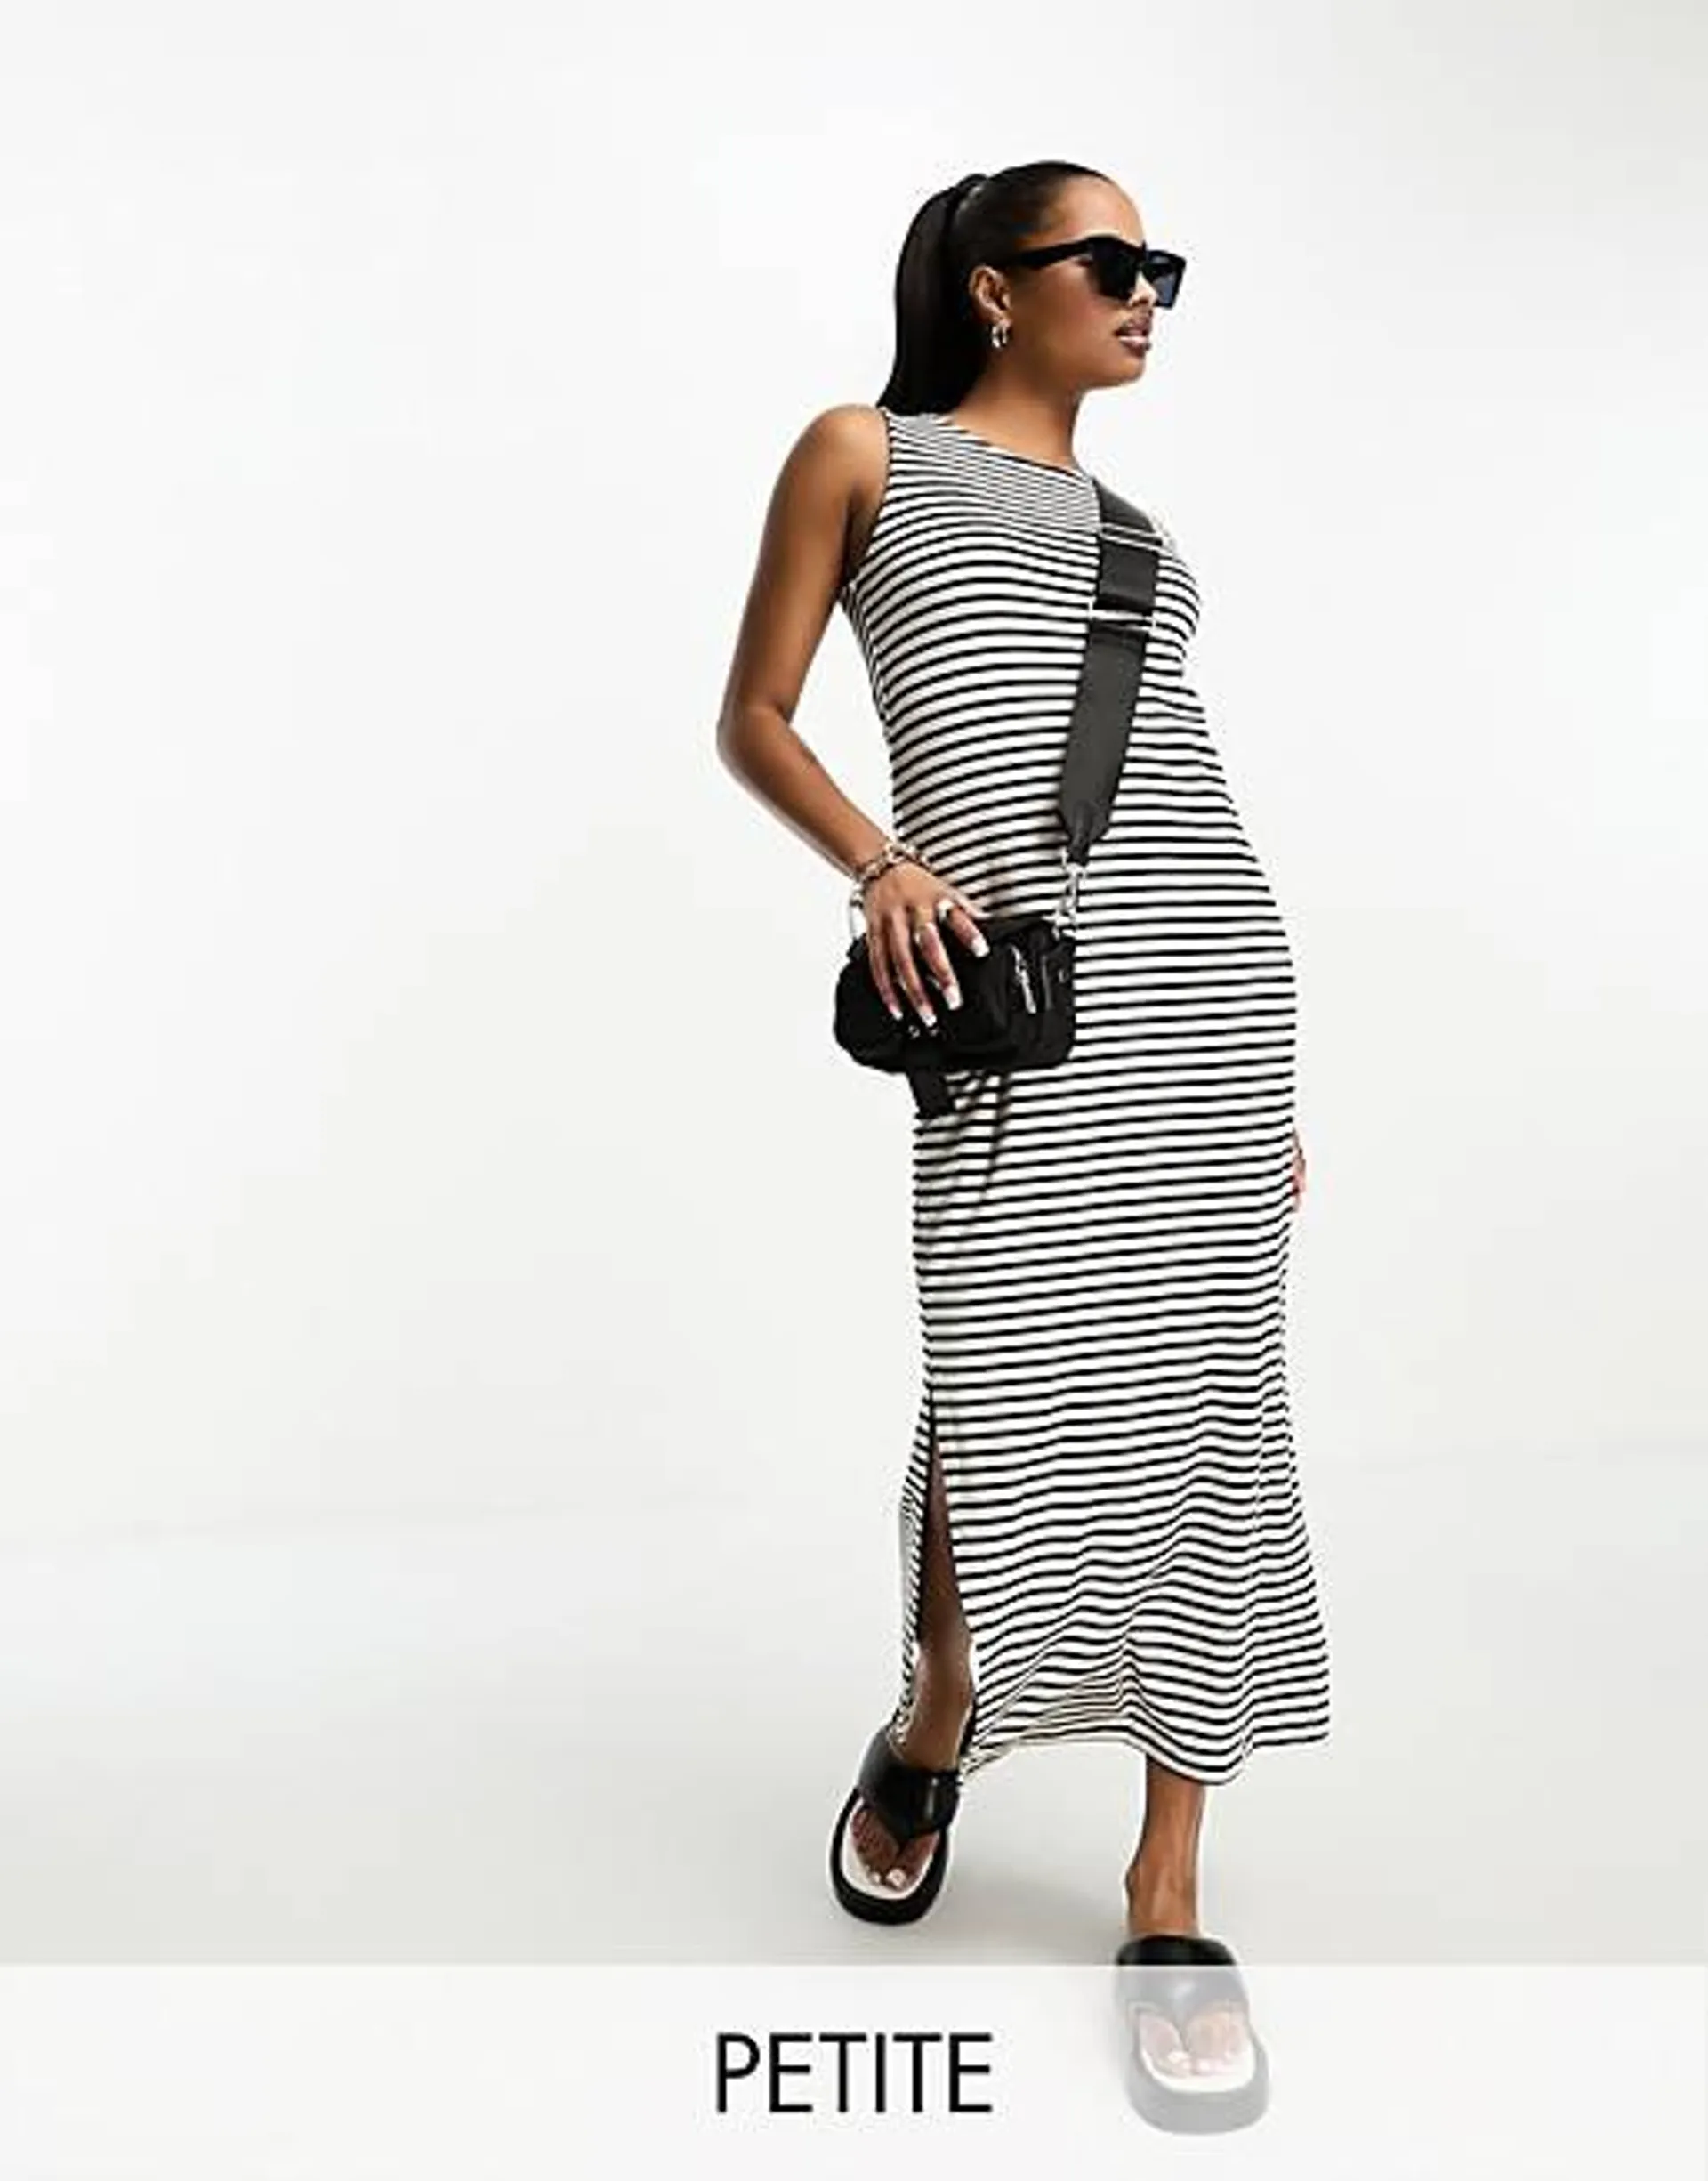 Vero Moda Aware Petite sleeveless maxi dress in mono stripe